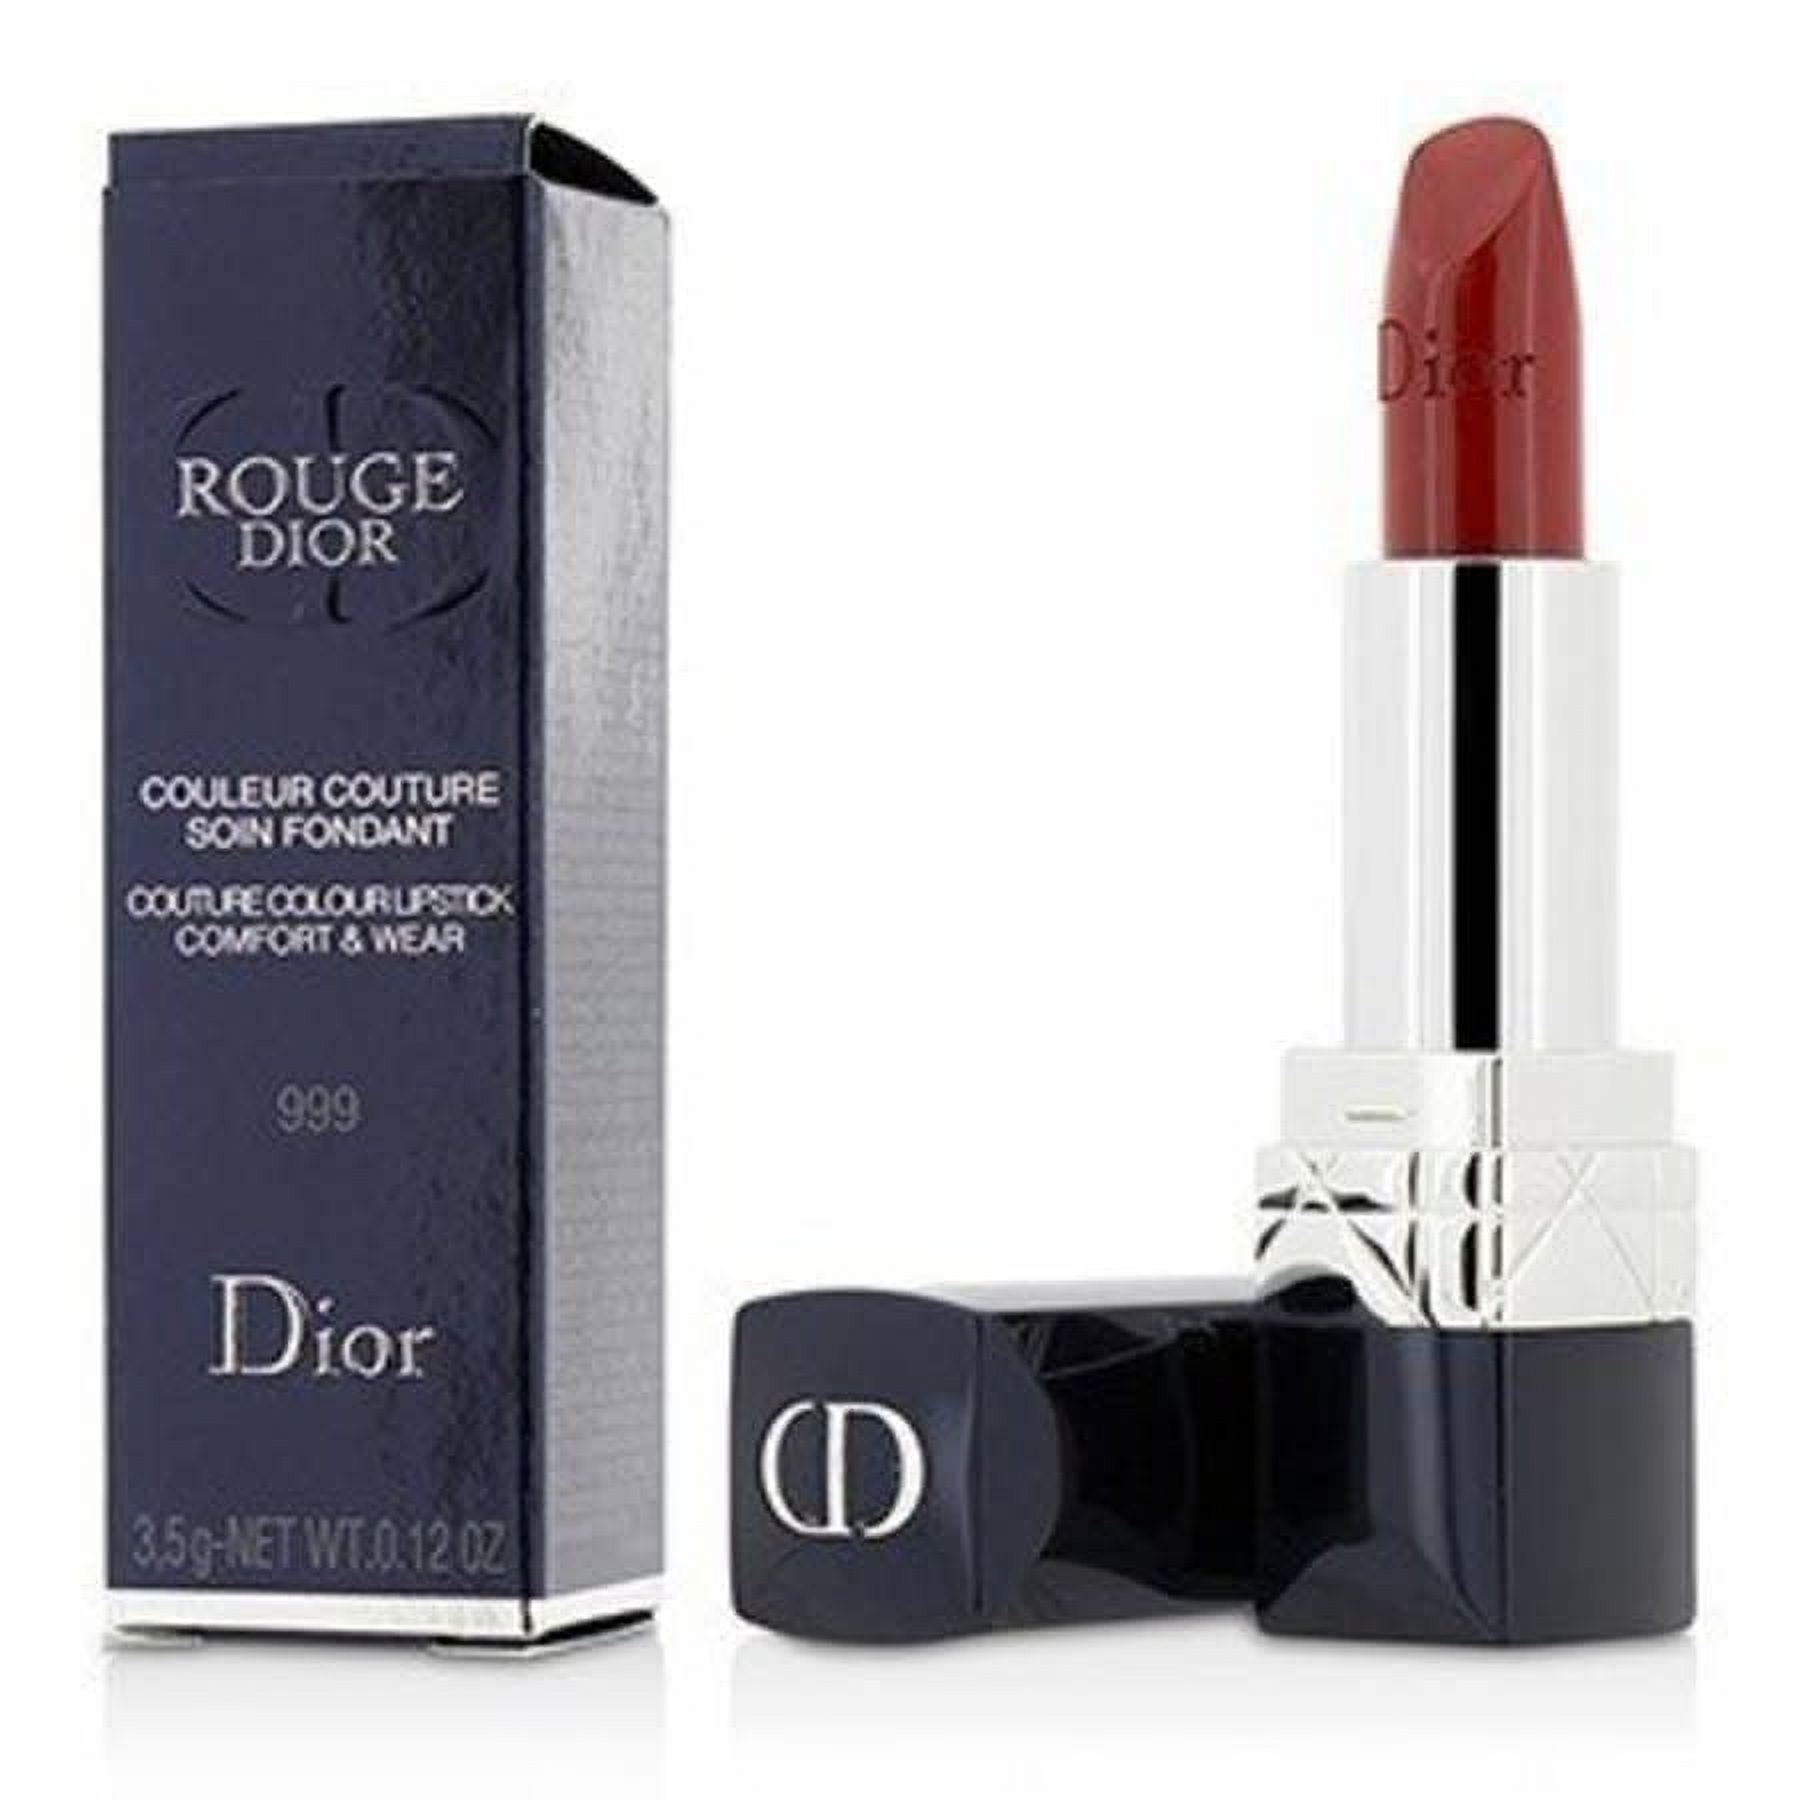 Christian Dior Rouge Dior 999 Lipstick